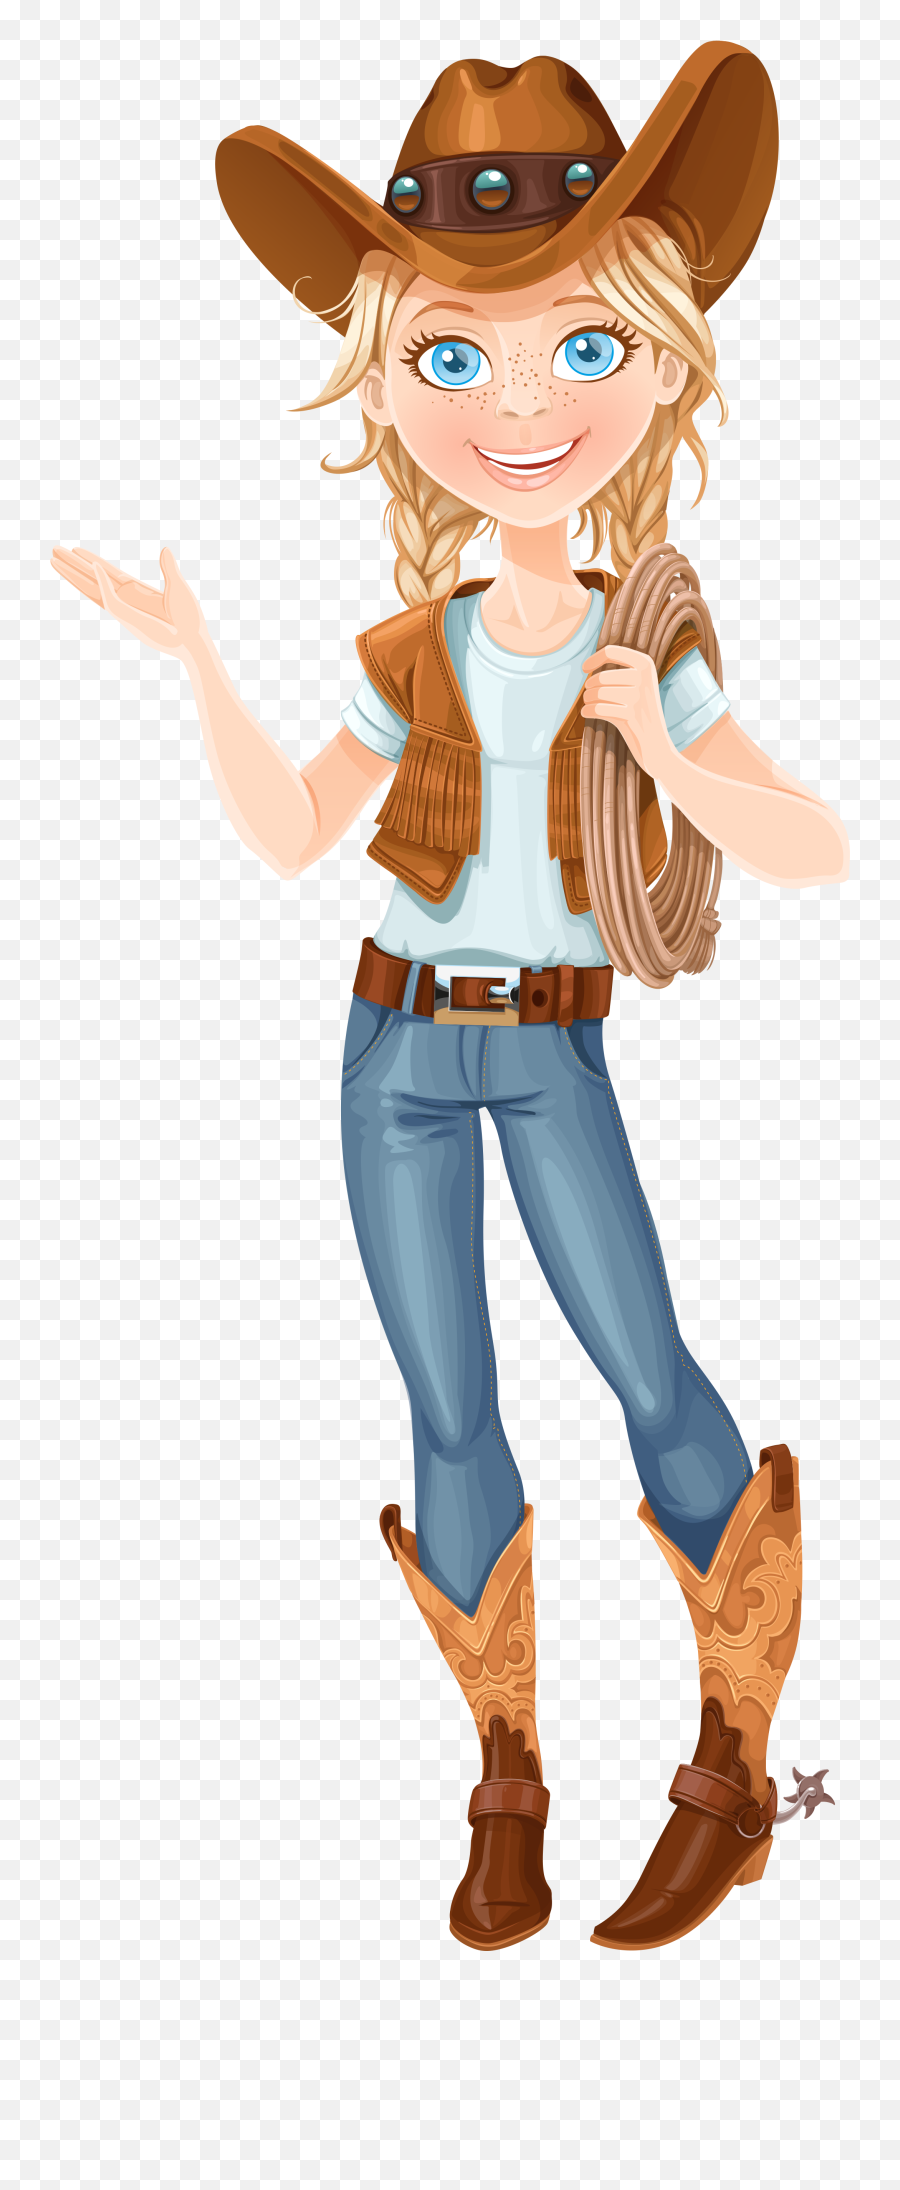 Printables - Cartoon Woman With Cowboy Boots Emoji,Annie Oakley Emojis